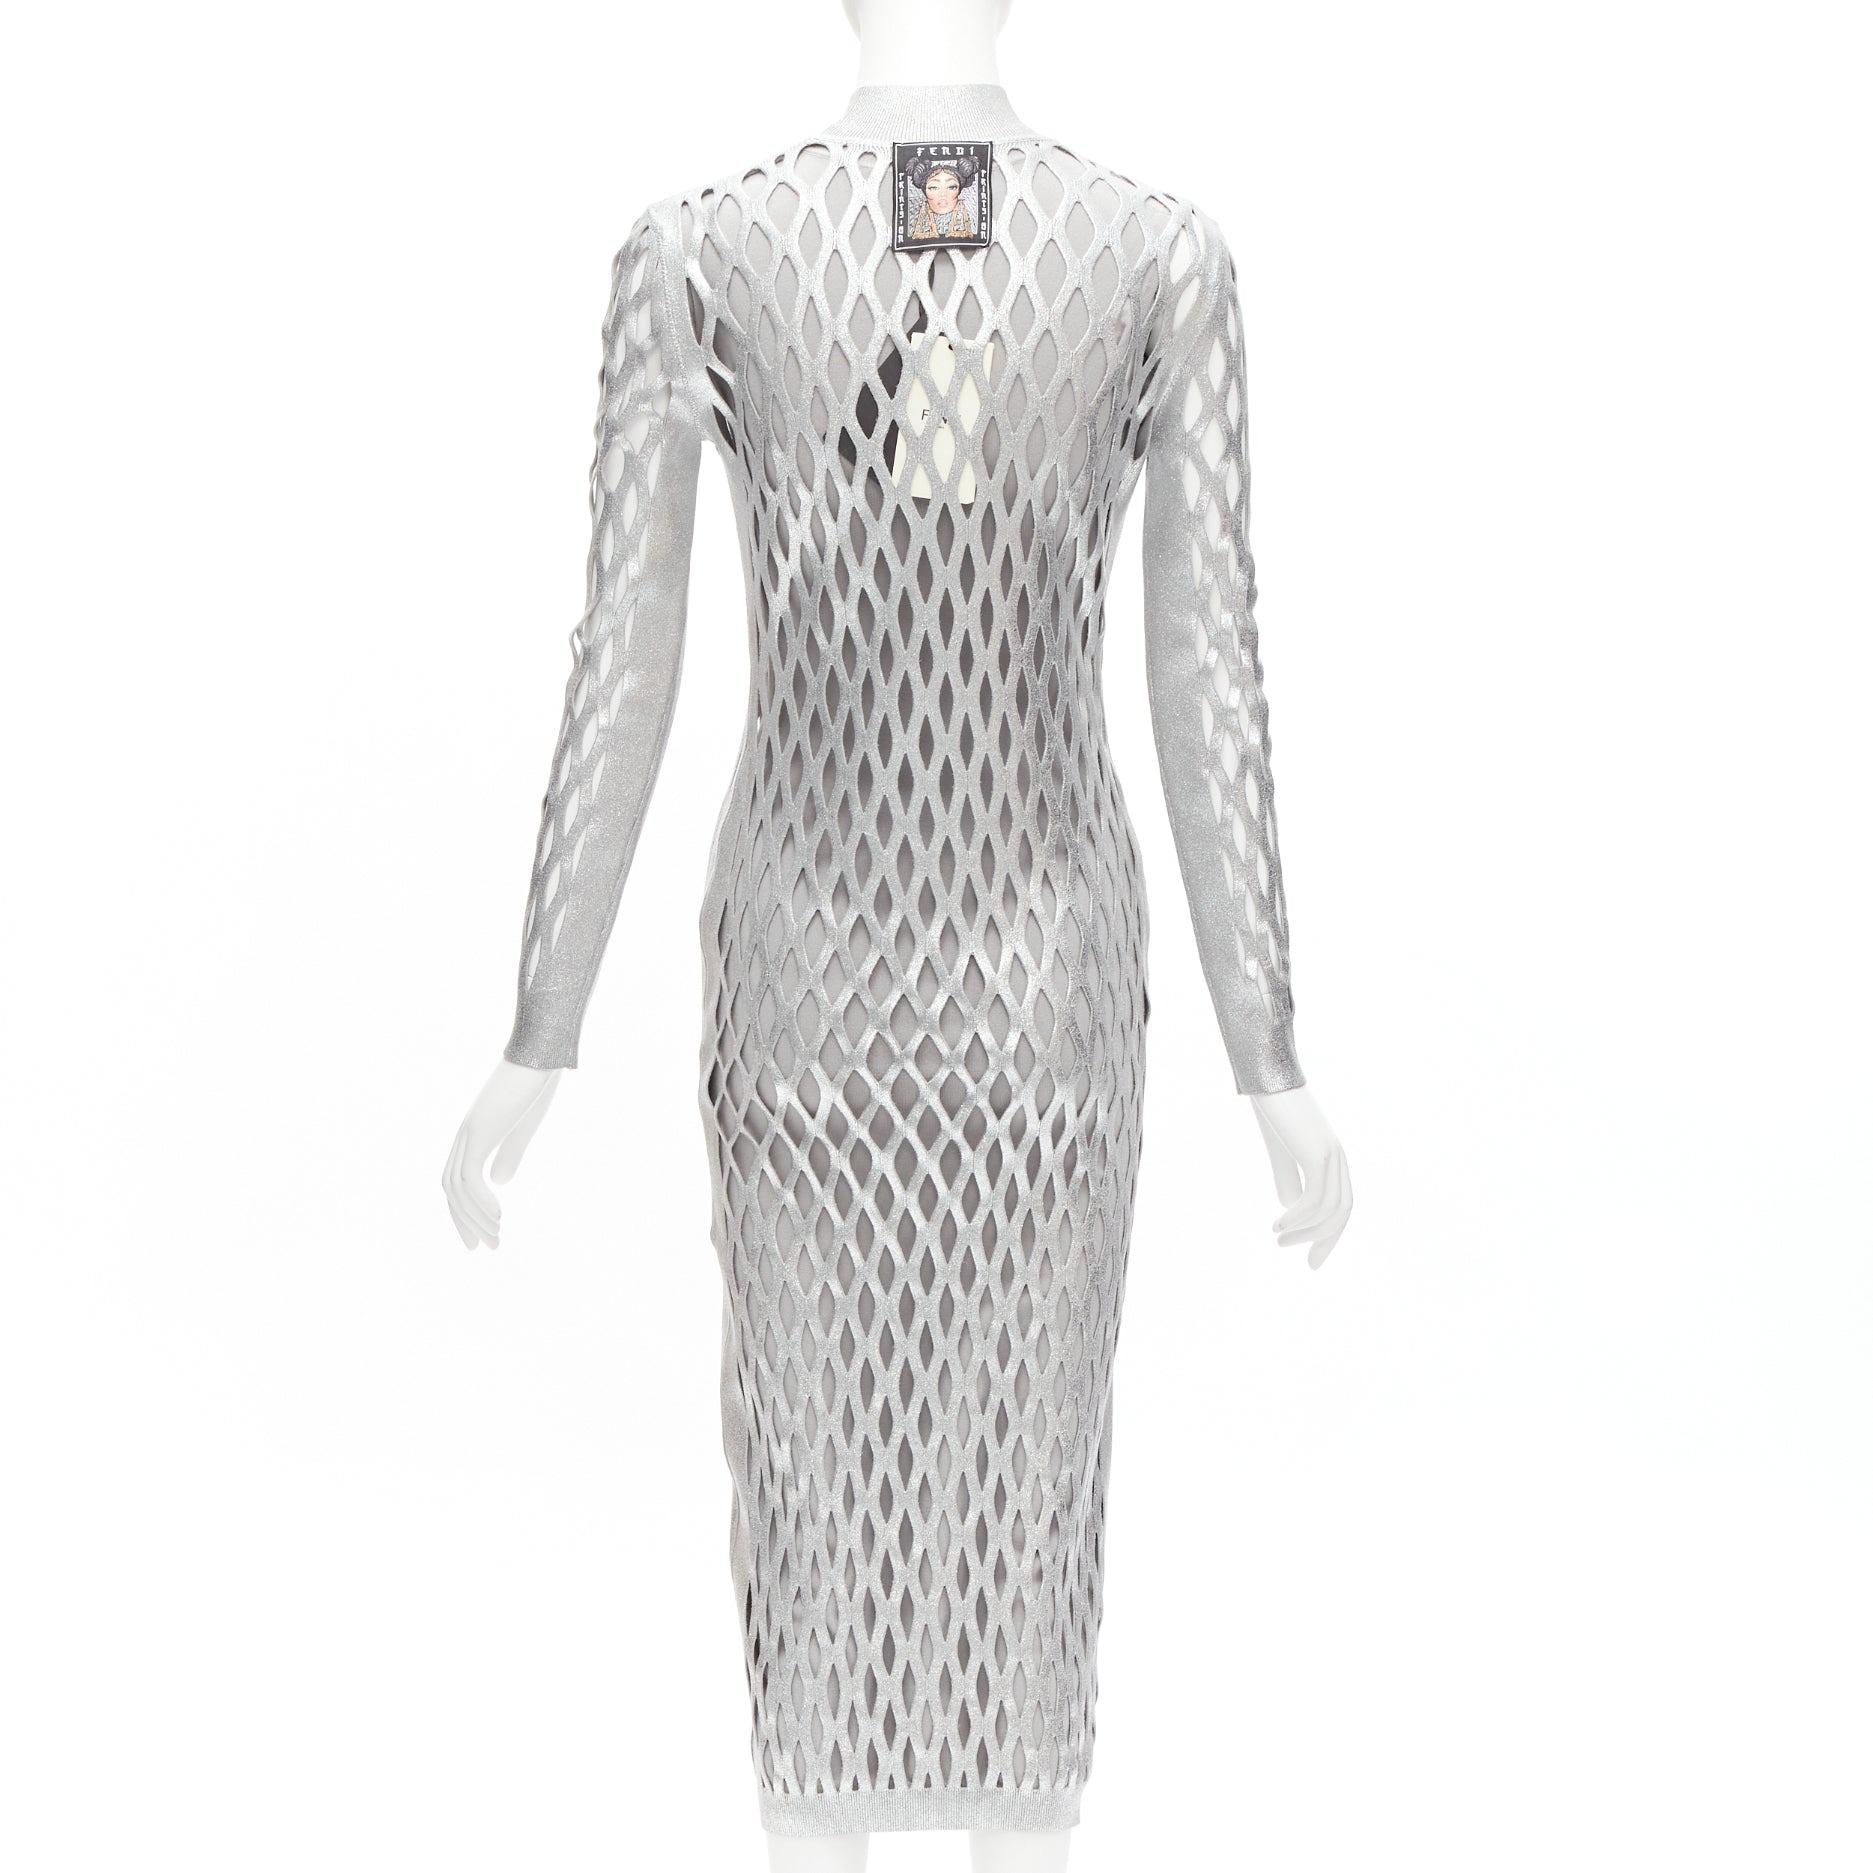 Women's new FENDI Nicki Minaj 2019 Runway Abito silver net cut out lined dress IT42 M